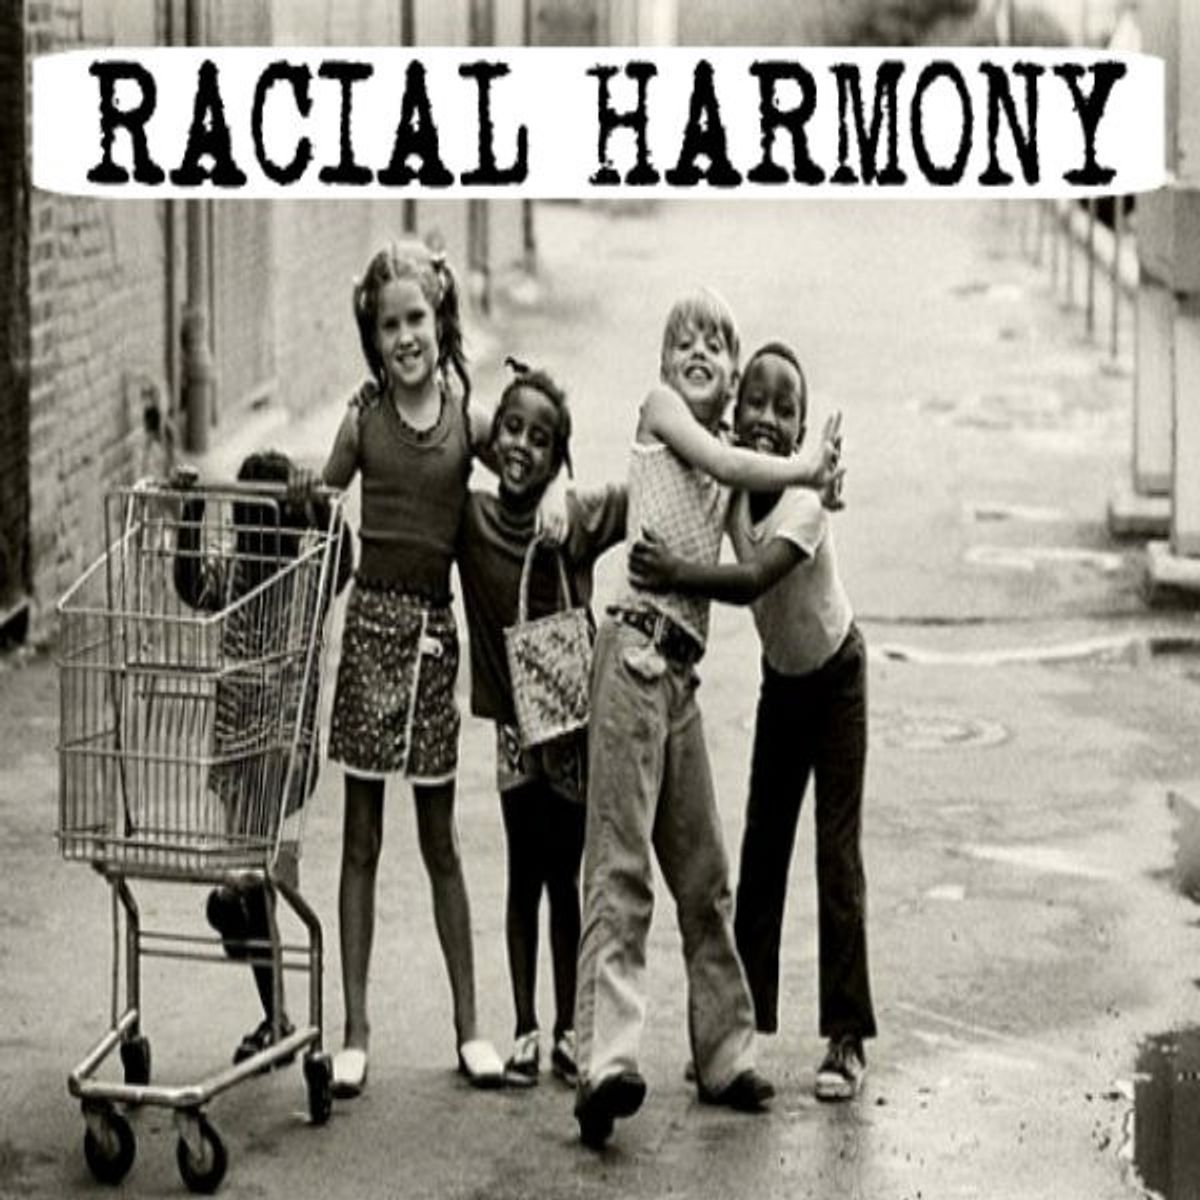 Racial Harmony